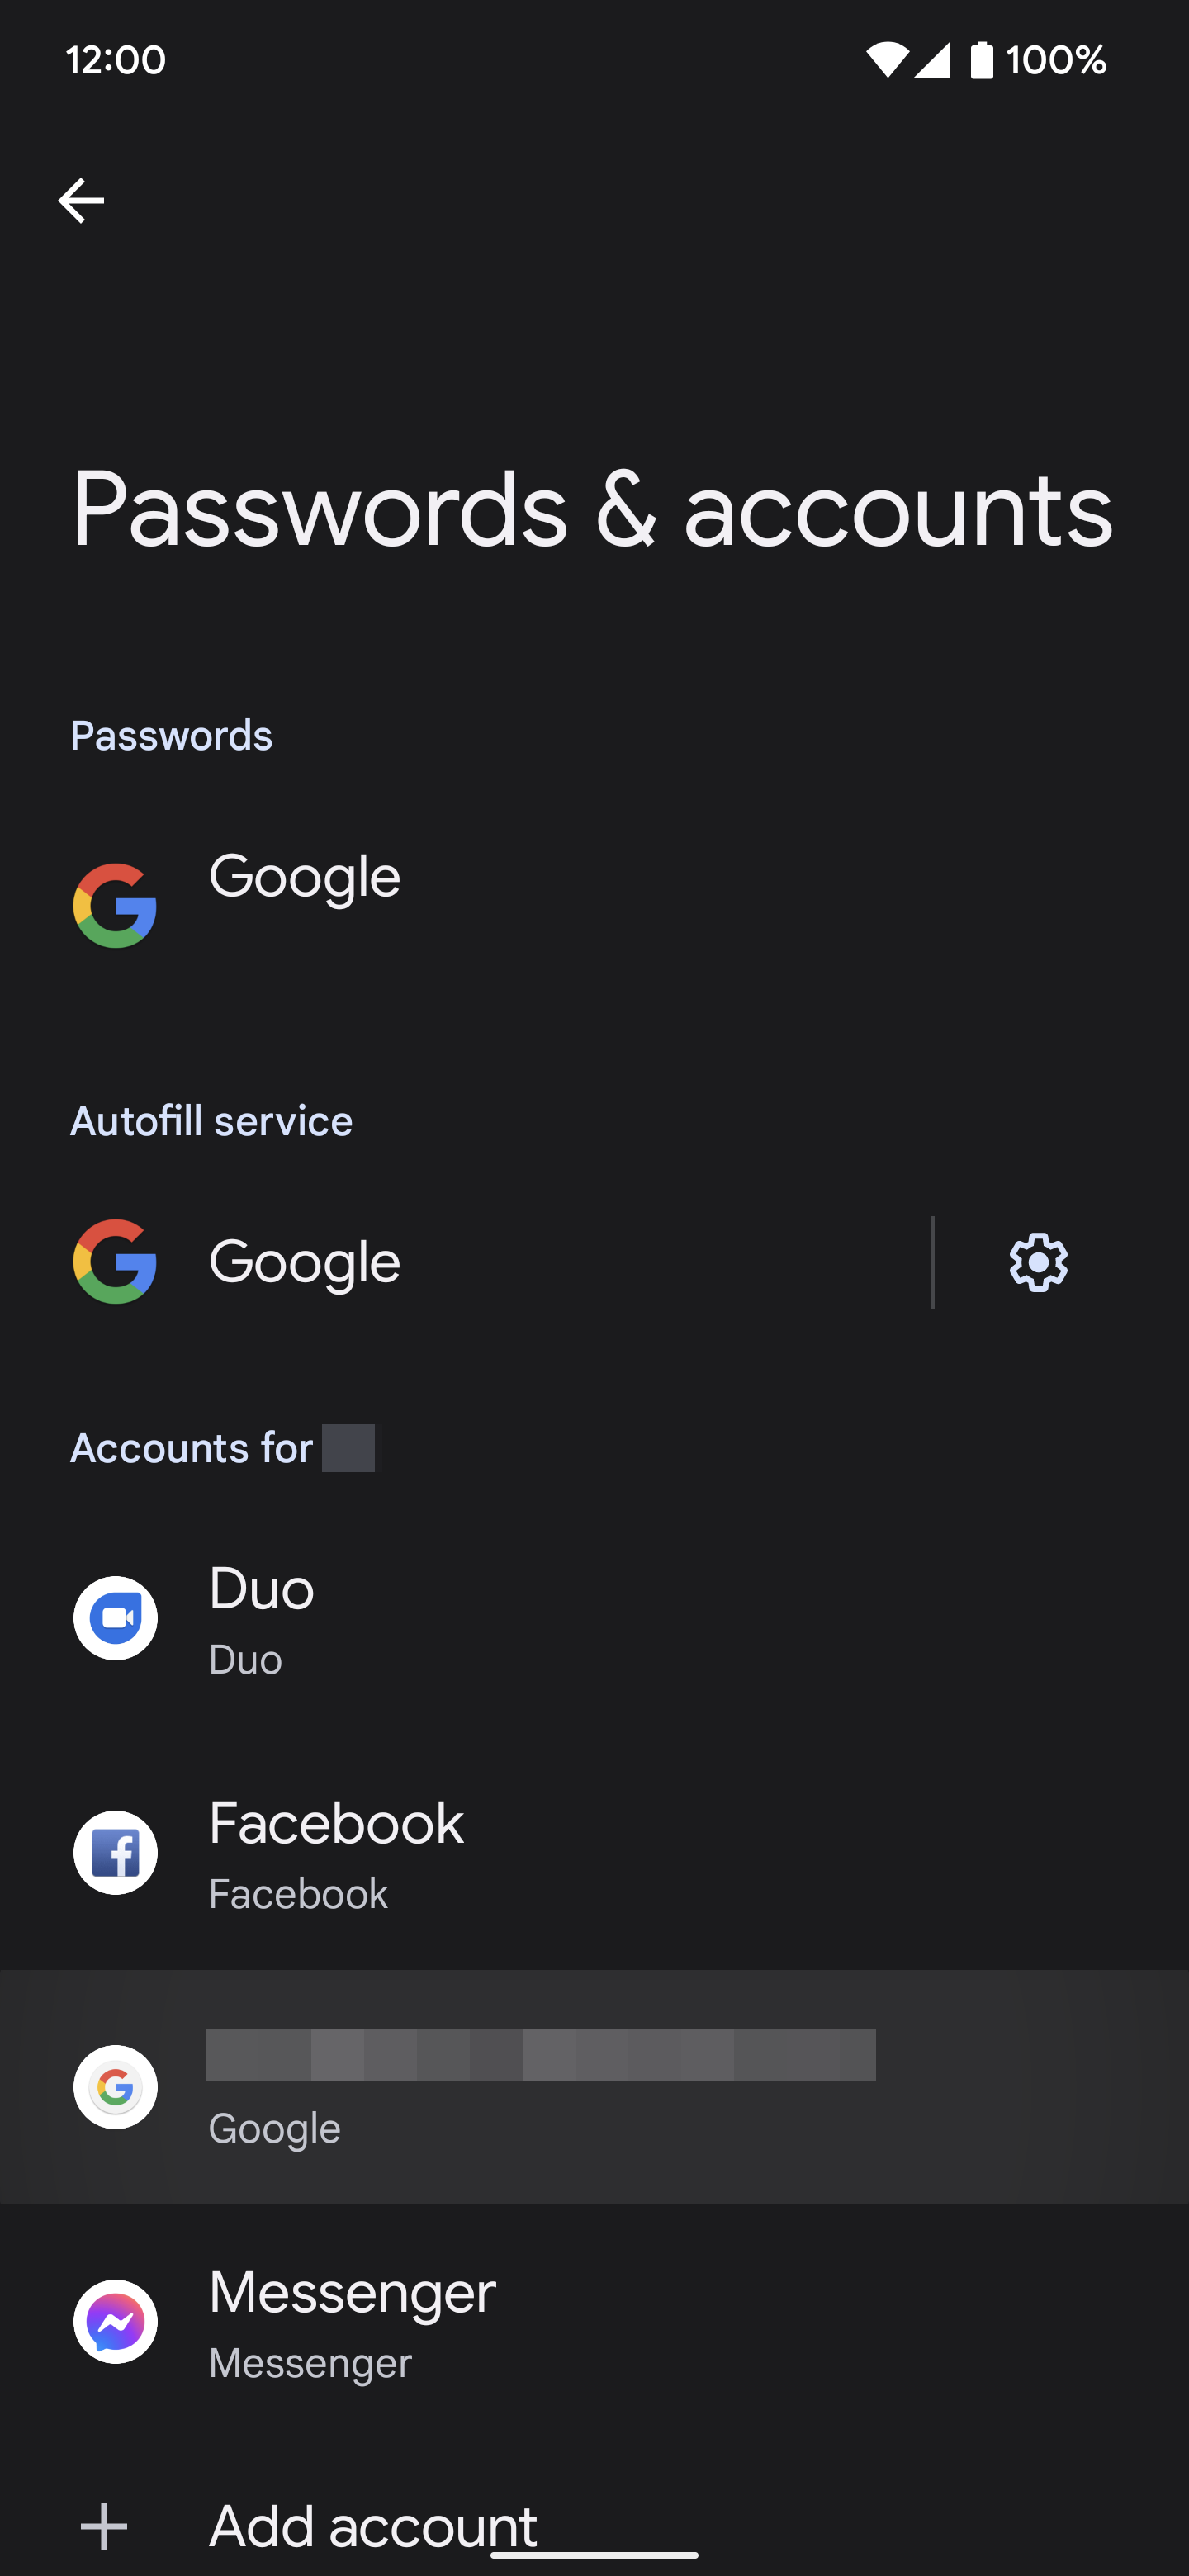 Password & accounts page screenshot